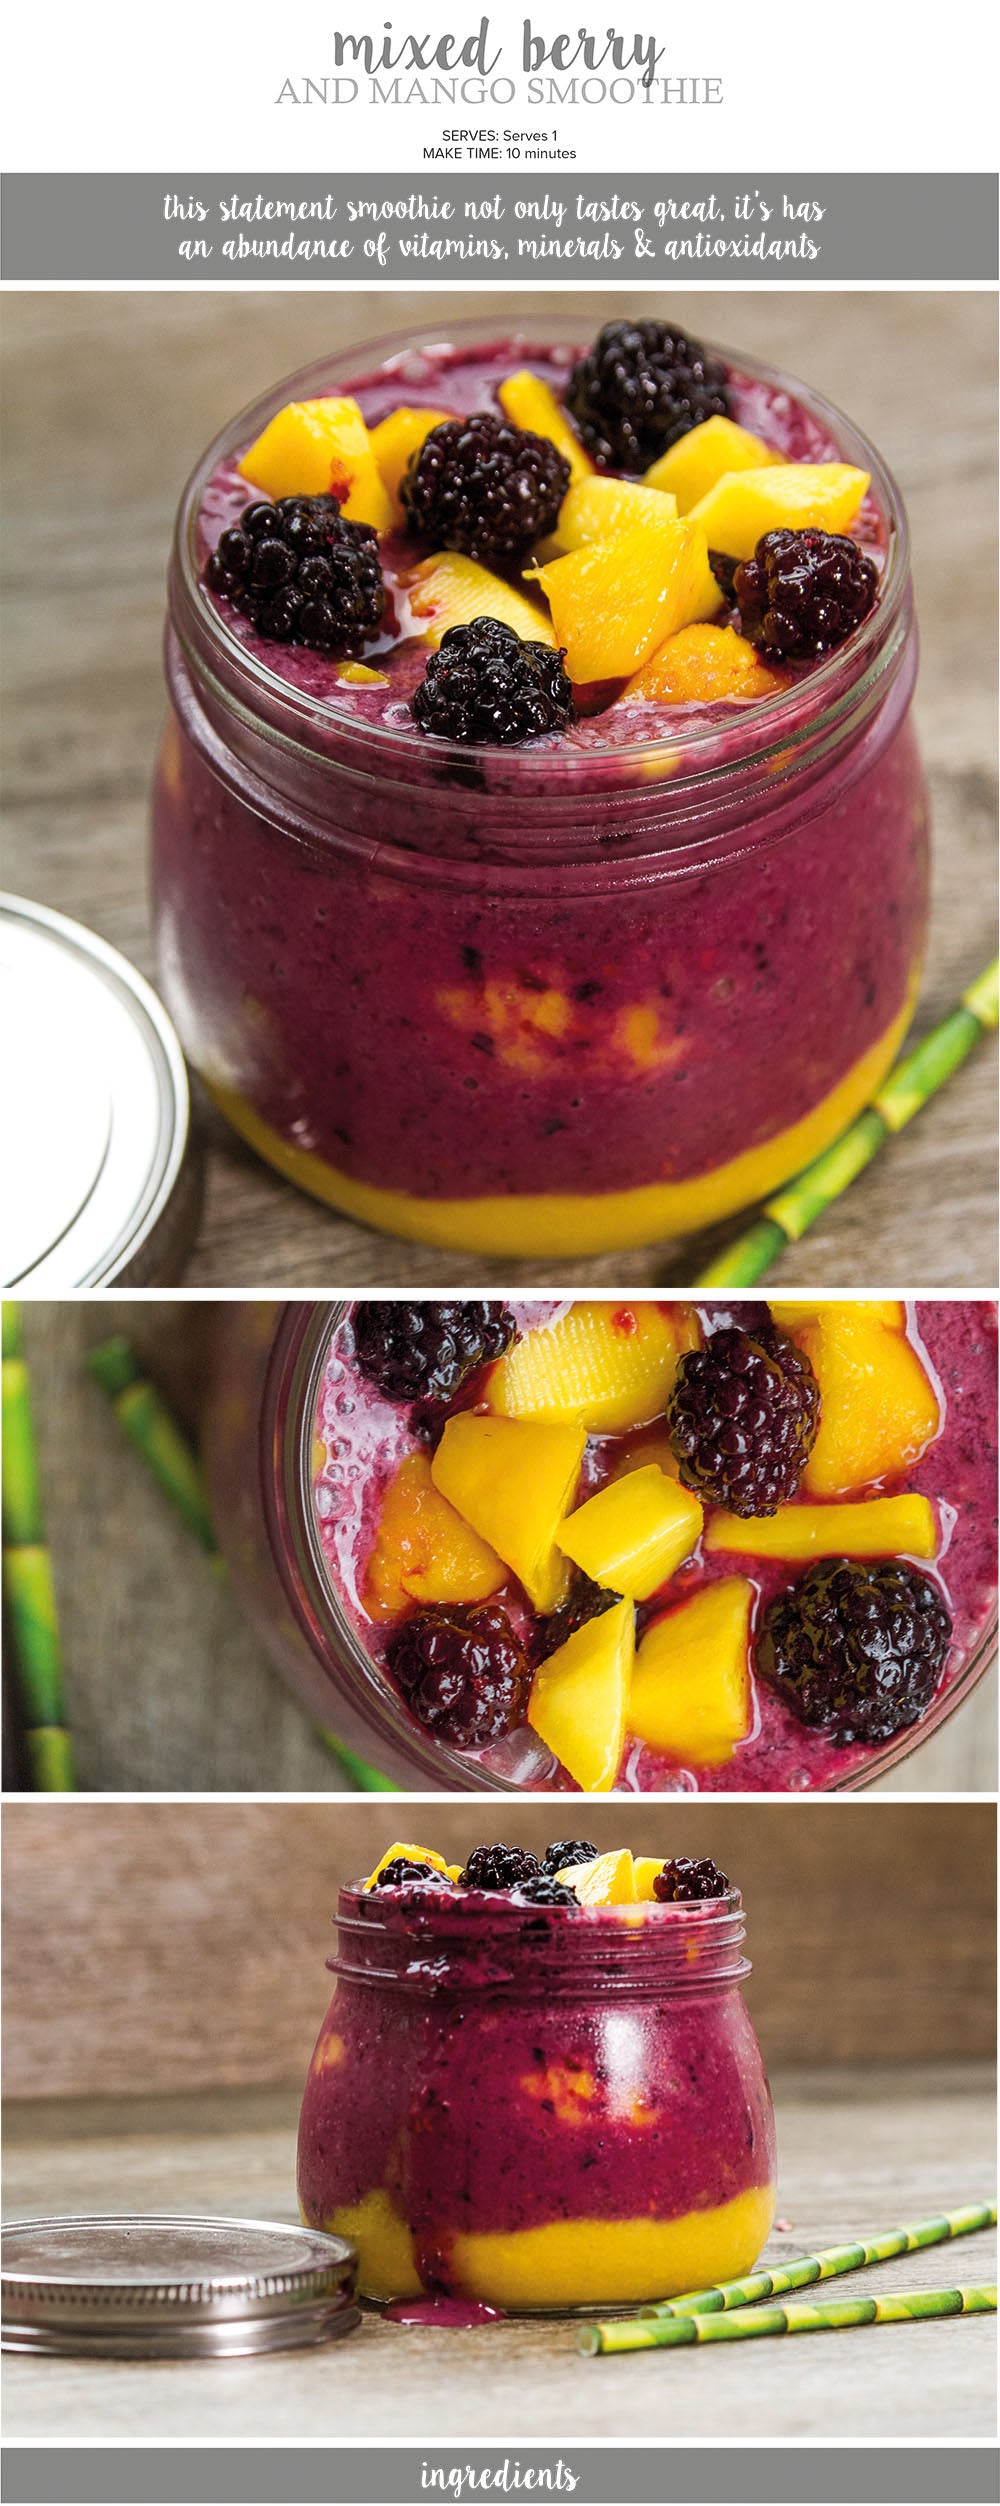 Mixed berry and mango smoothie recipe